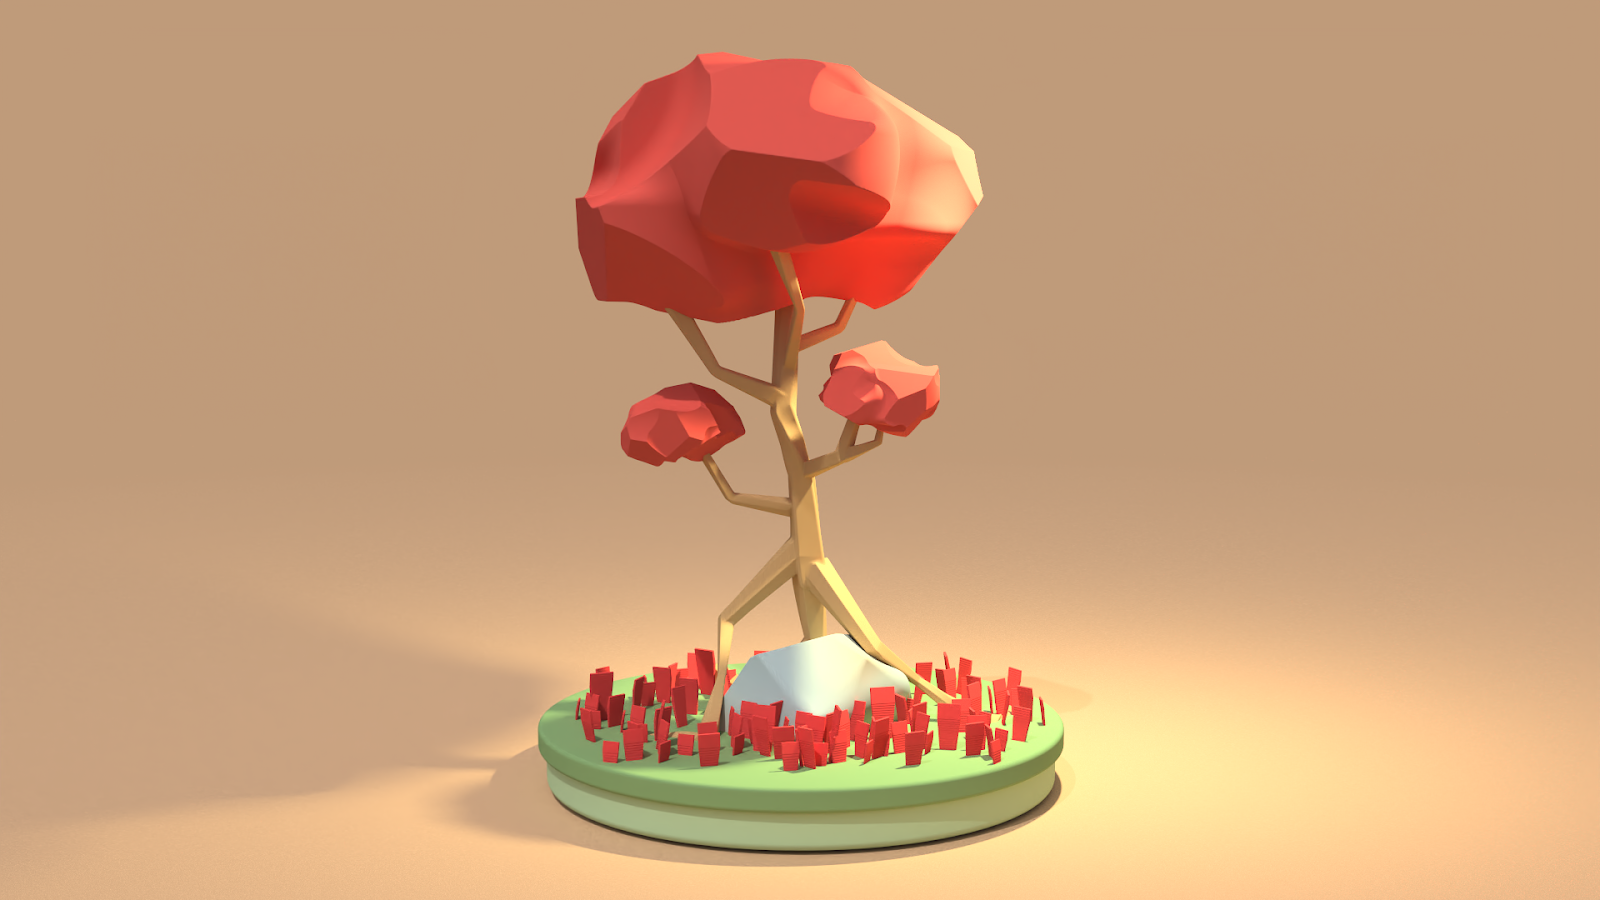 3D red tree model